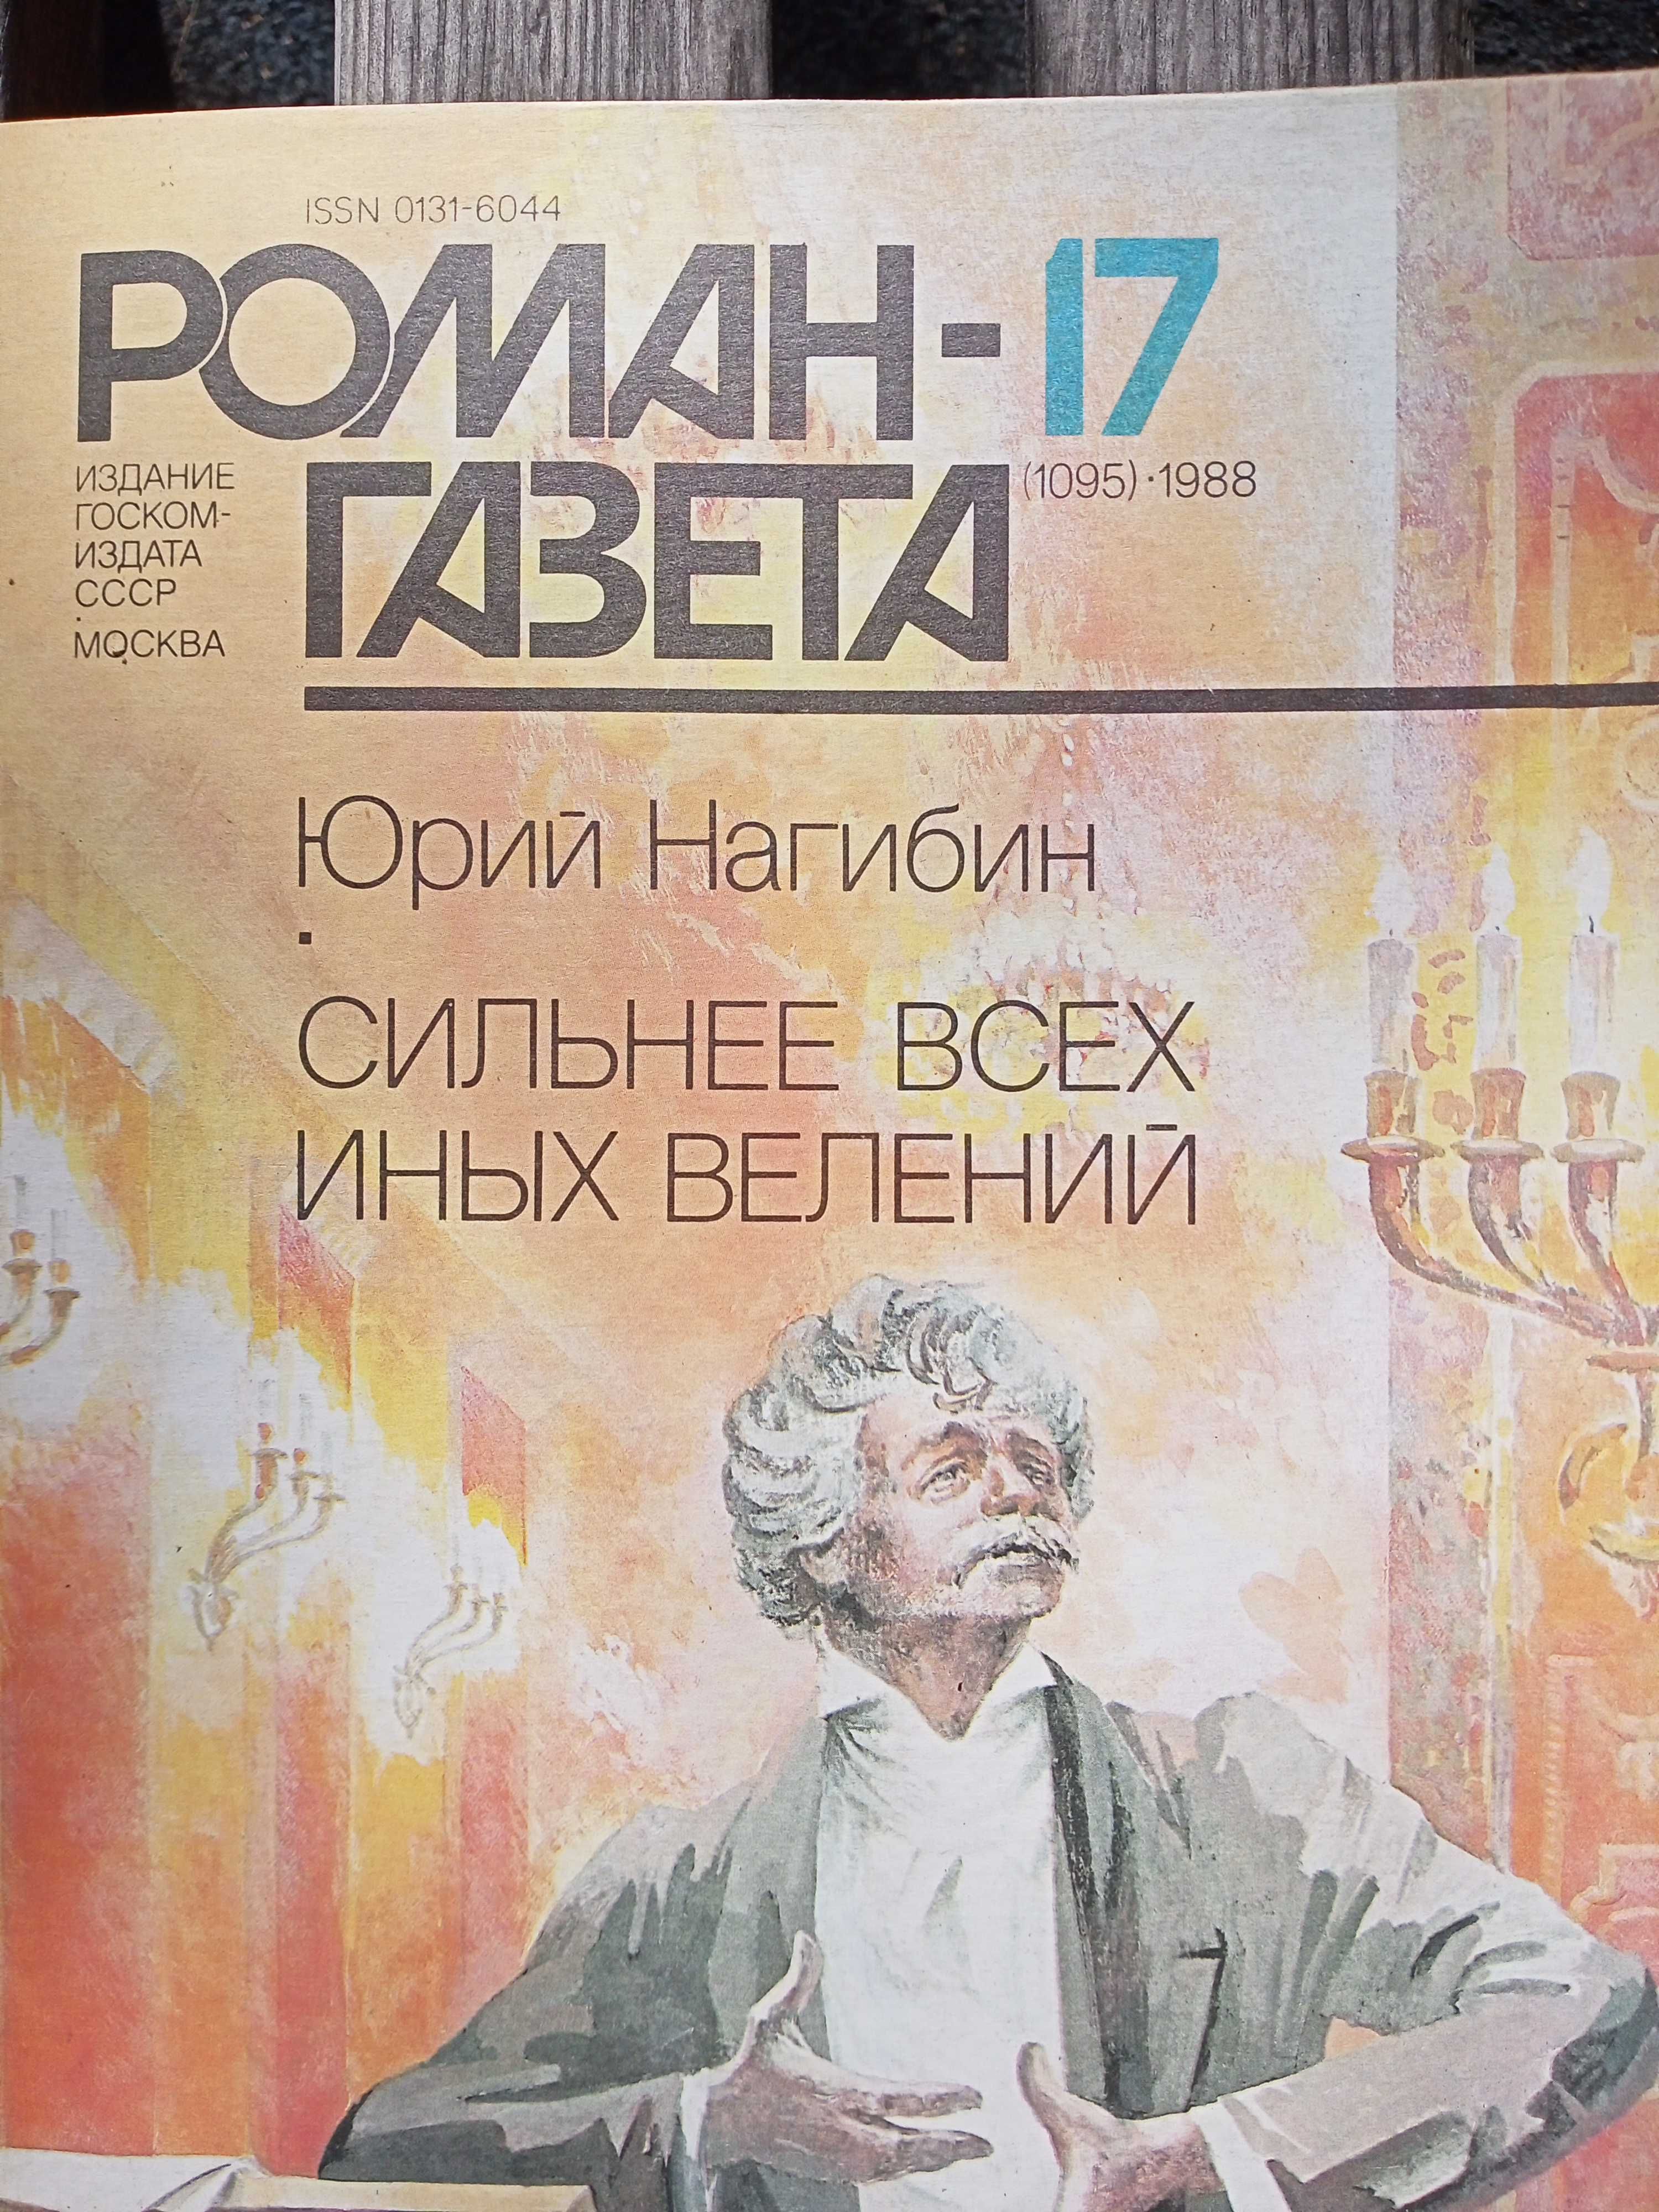 Роман- газета, журналы